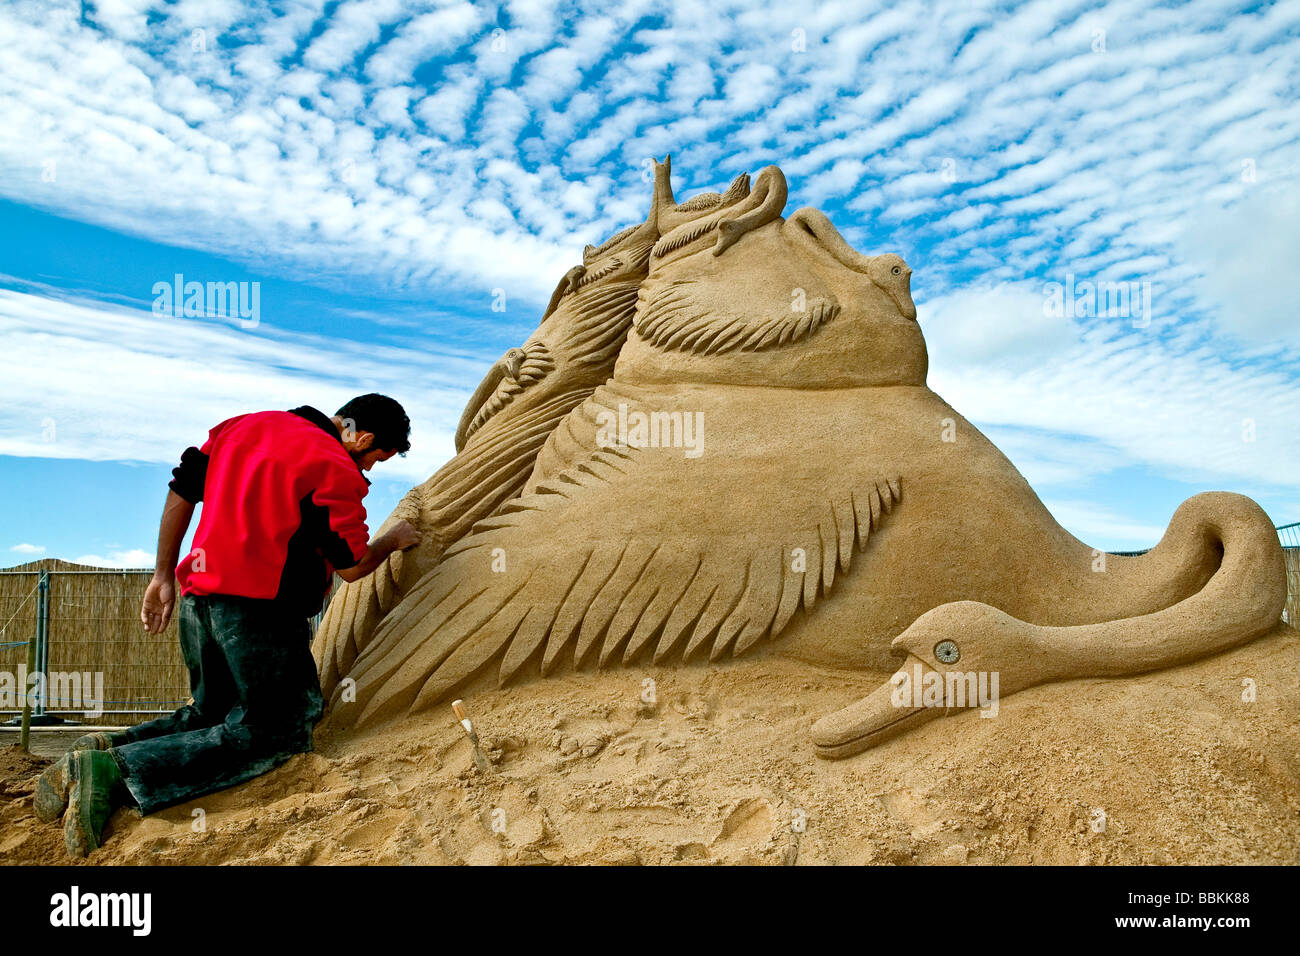 Man creating a sand sculpture Stock Photo